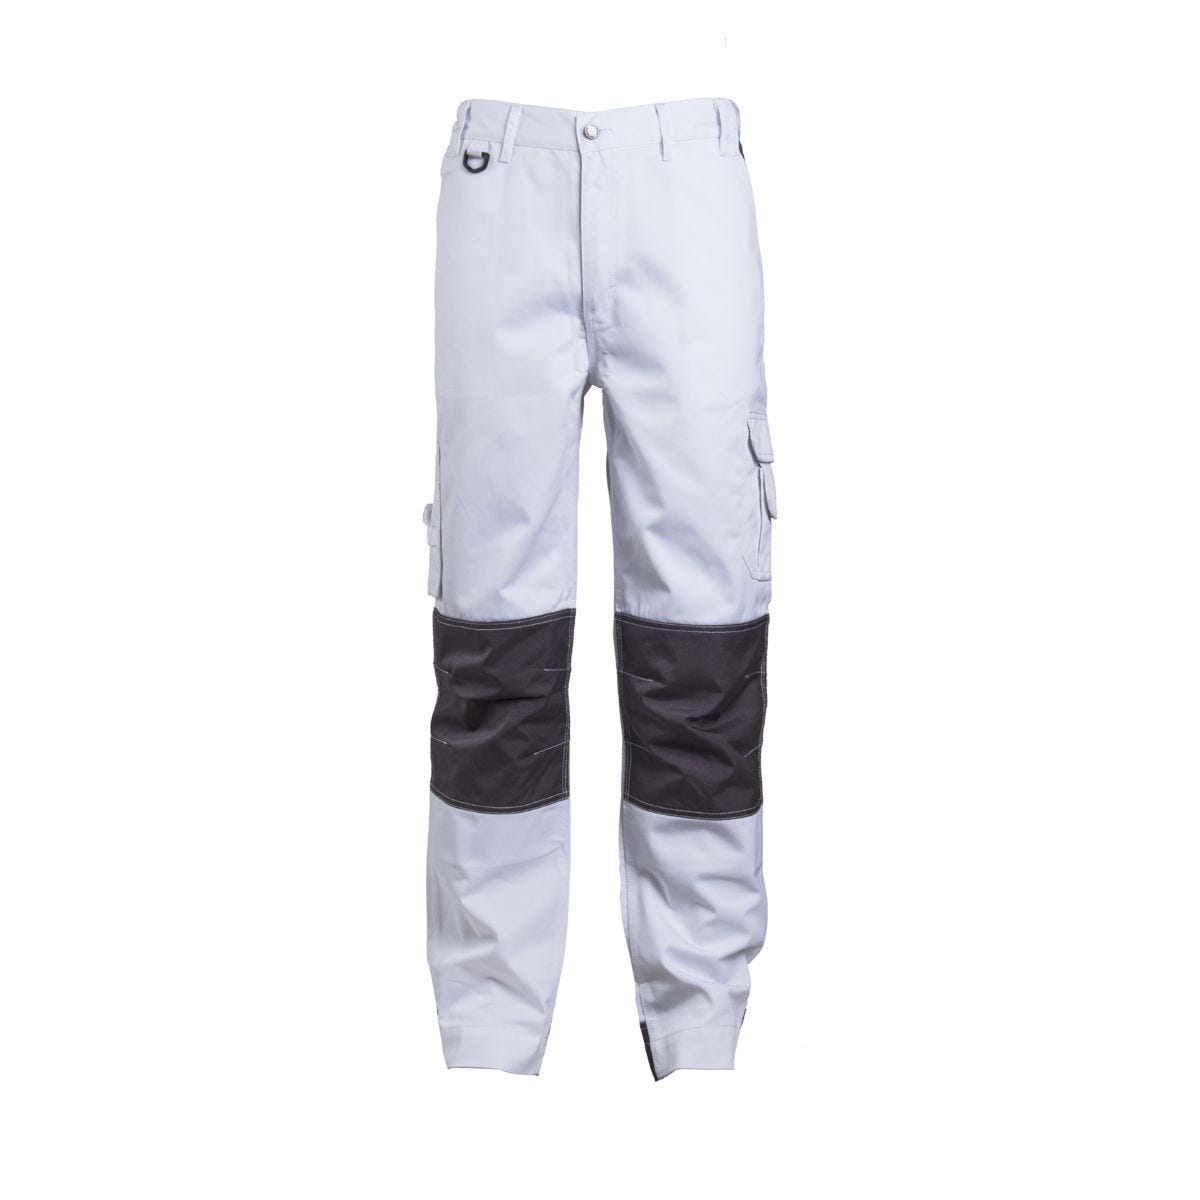 Pantalon CLASS blanc - COVERGUARD - Taille M 0